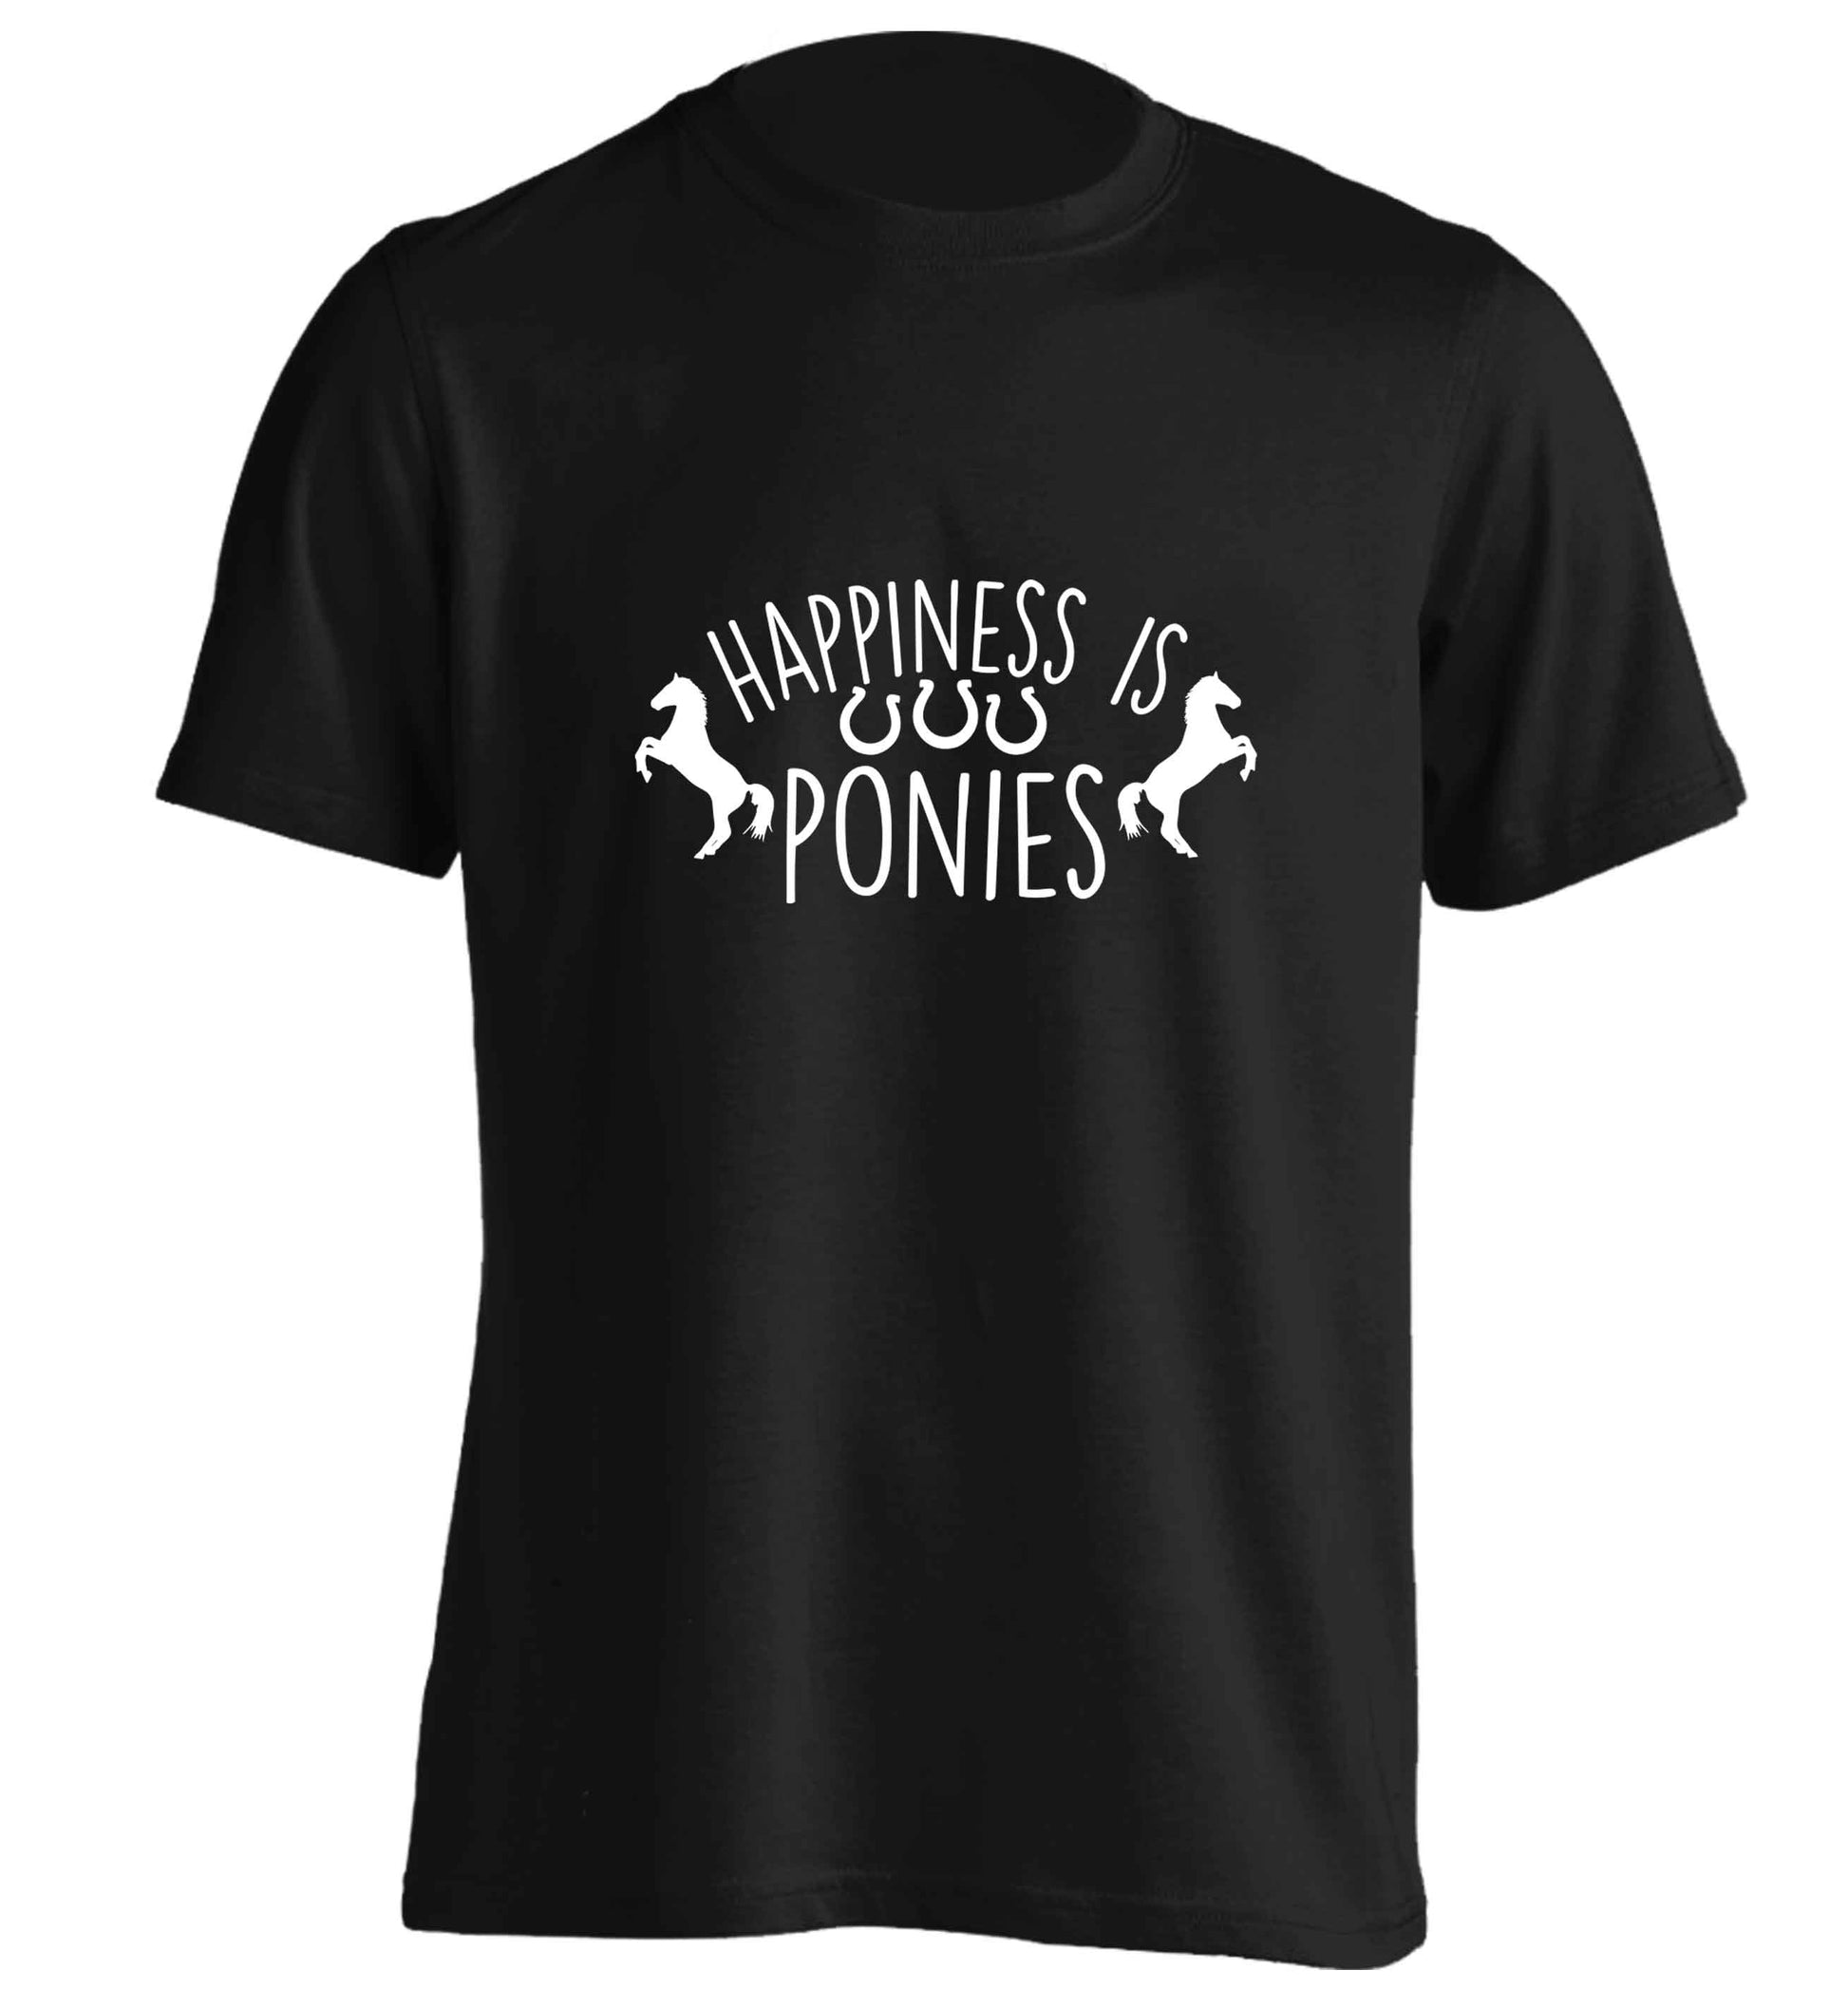 Happiness is ponies adults unisex black Tshirt 2XL